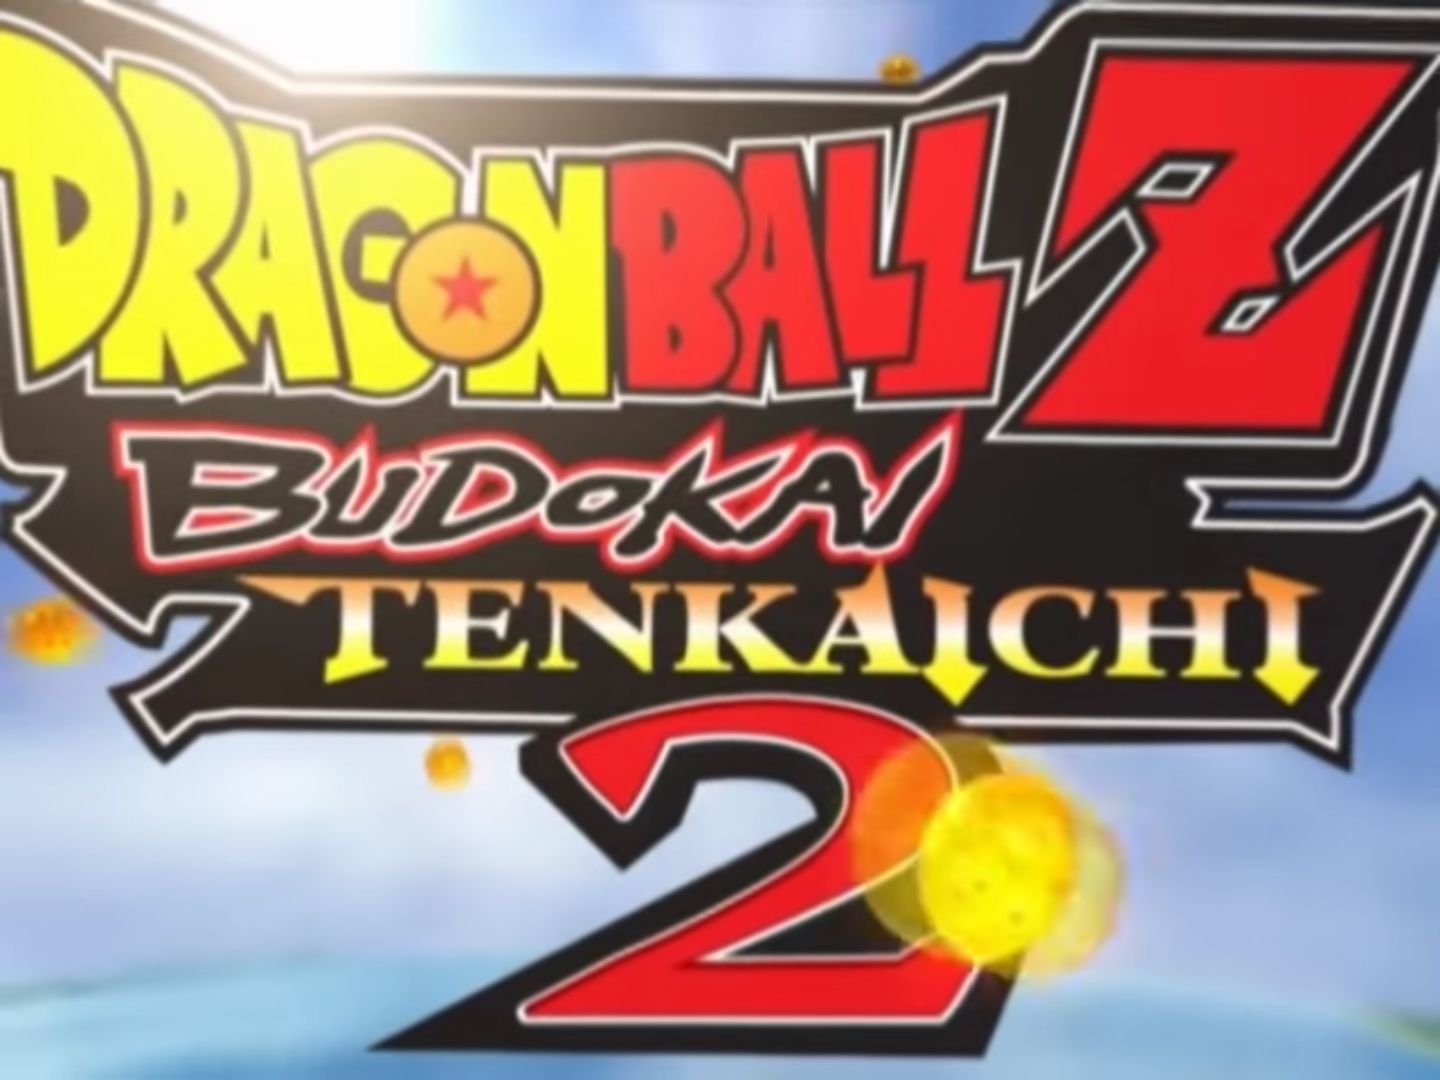 Dragon Ball Z Budokai Tenkaichi 2 Old Games Download